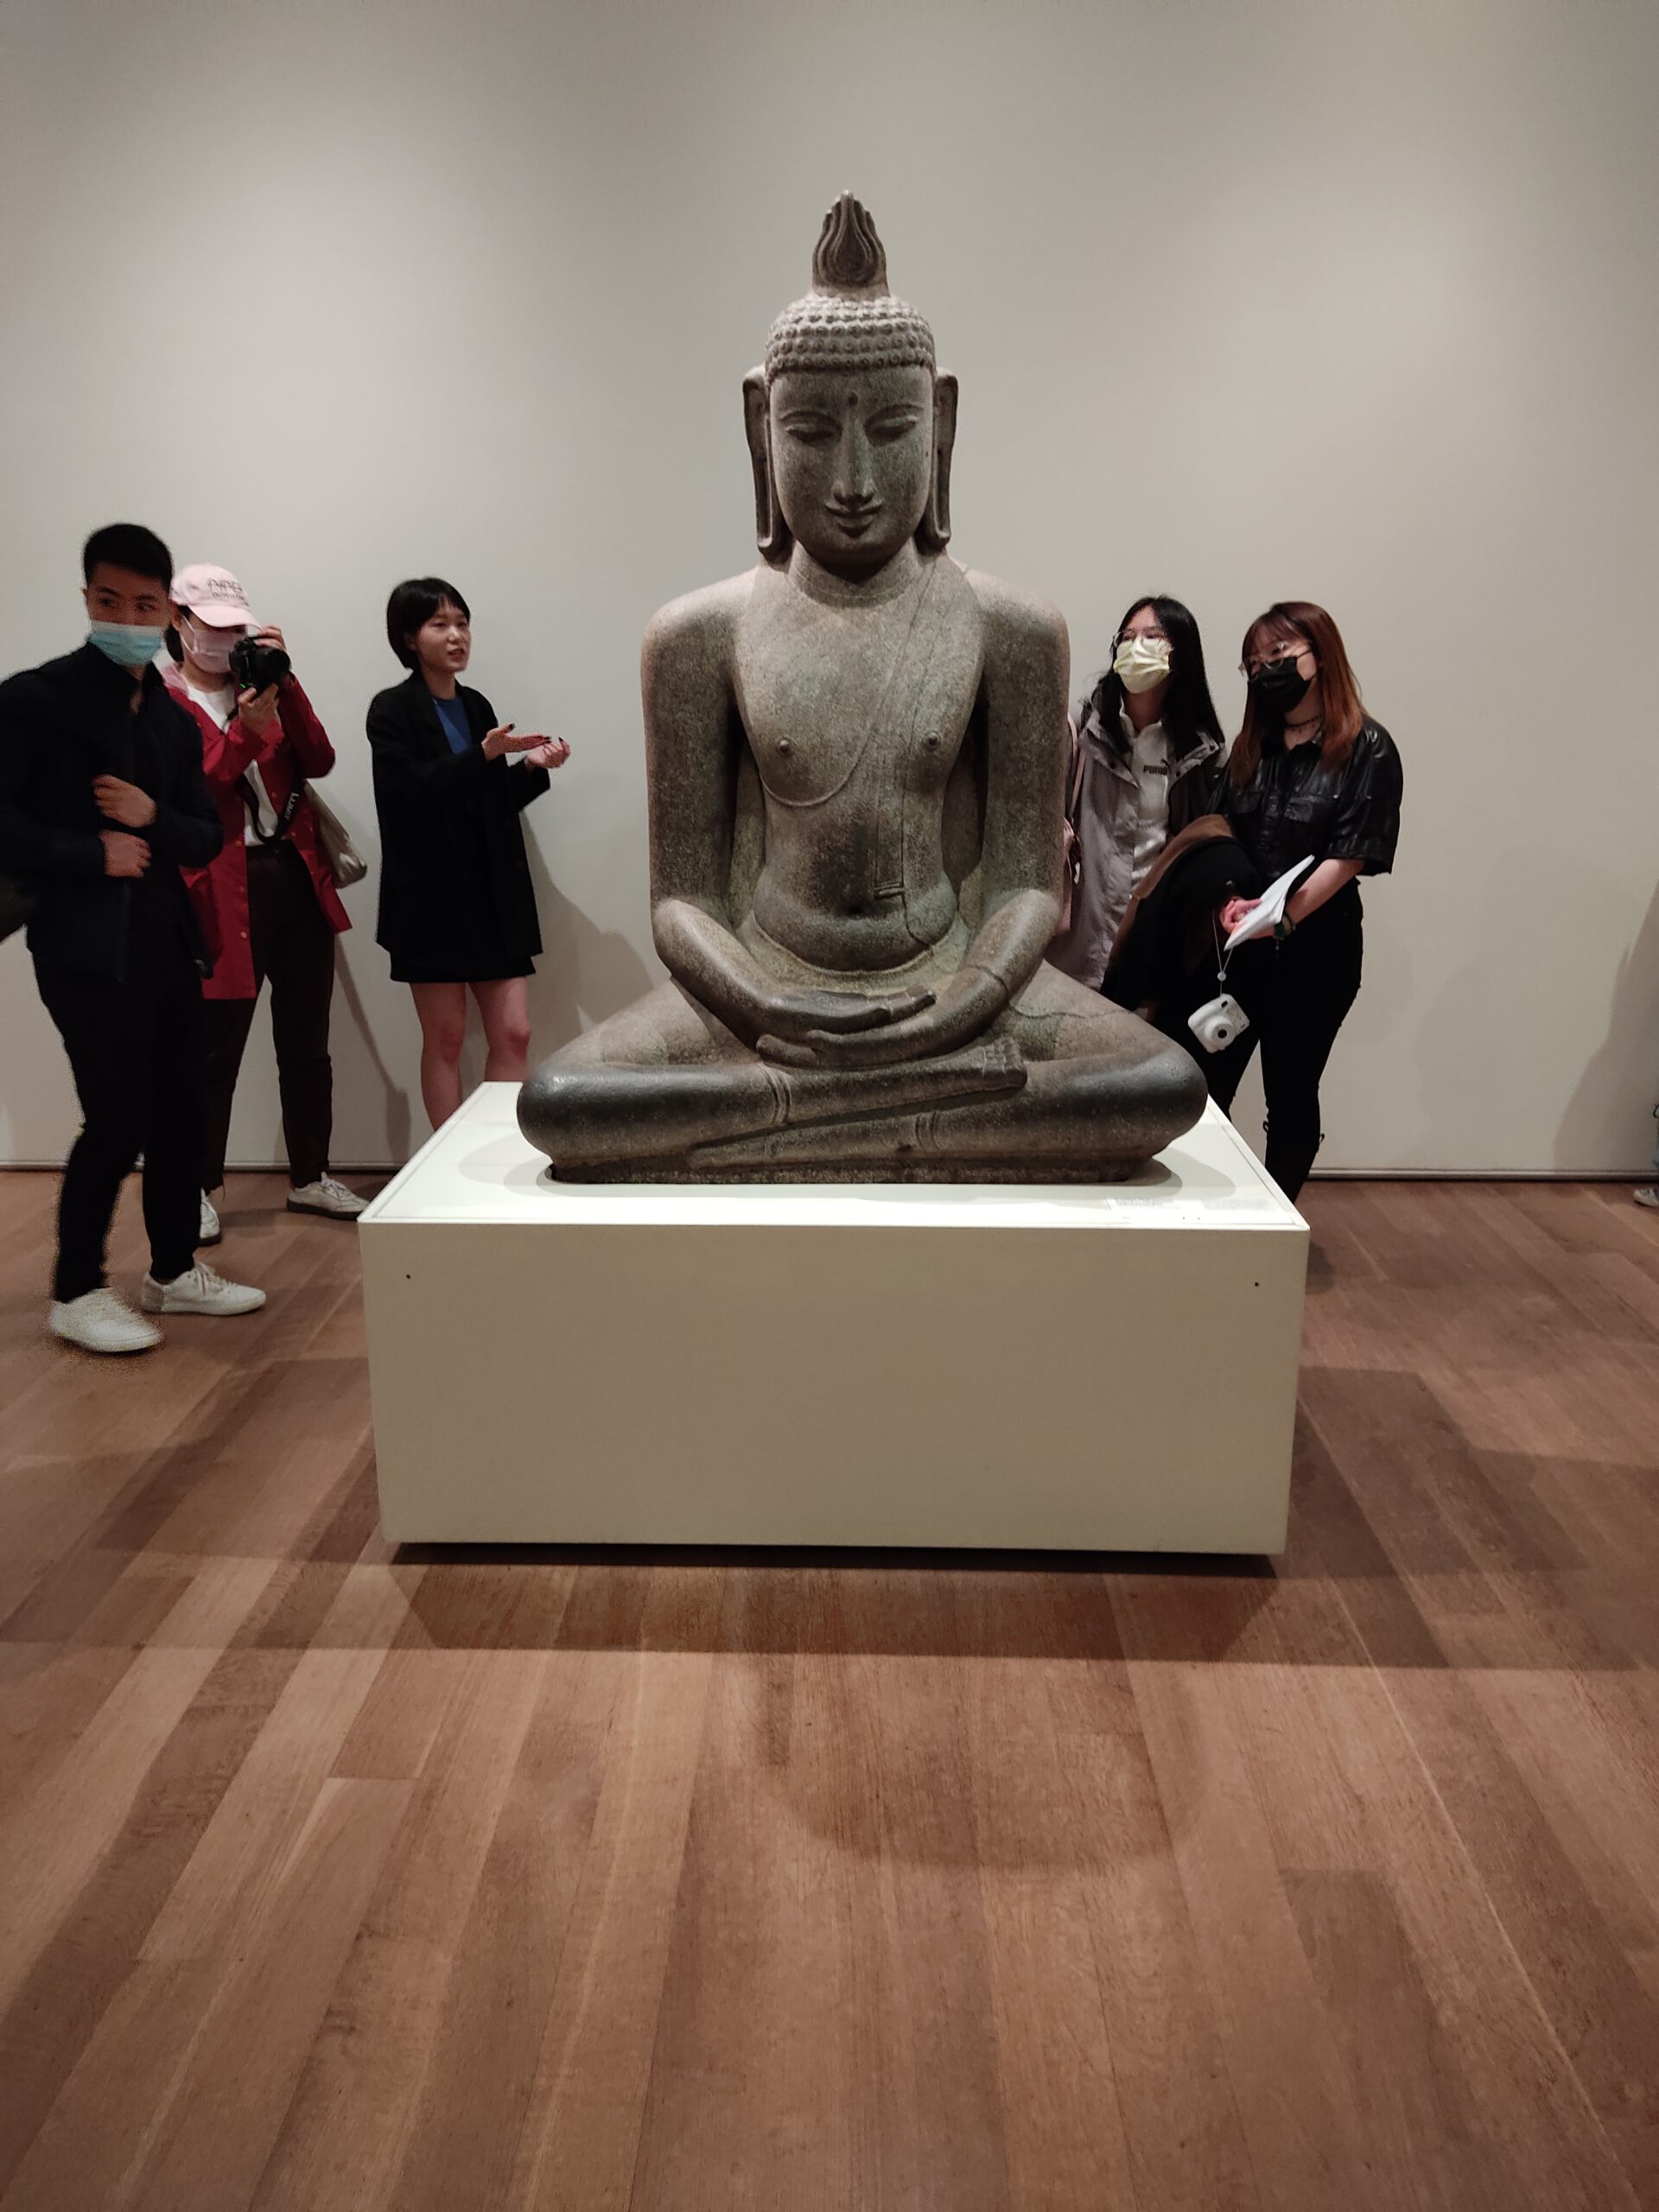 Chicago Art institute must see - Buddha Shakyamuni Seated in Meditation 